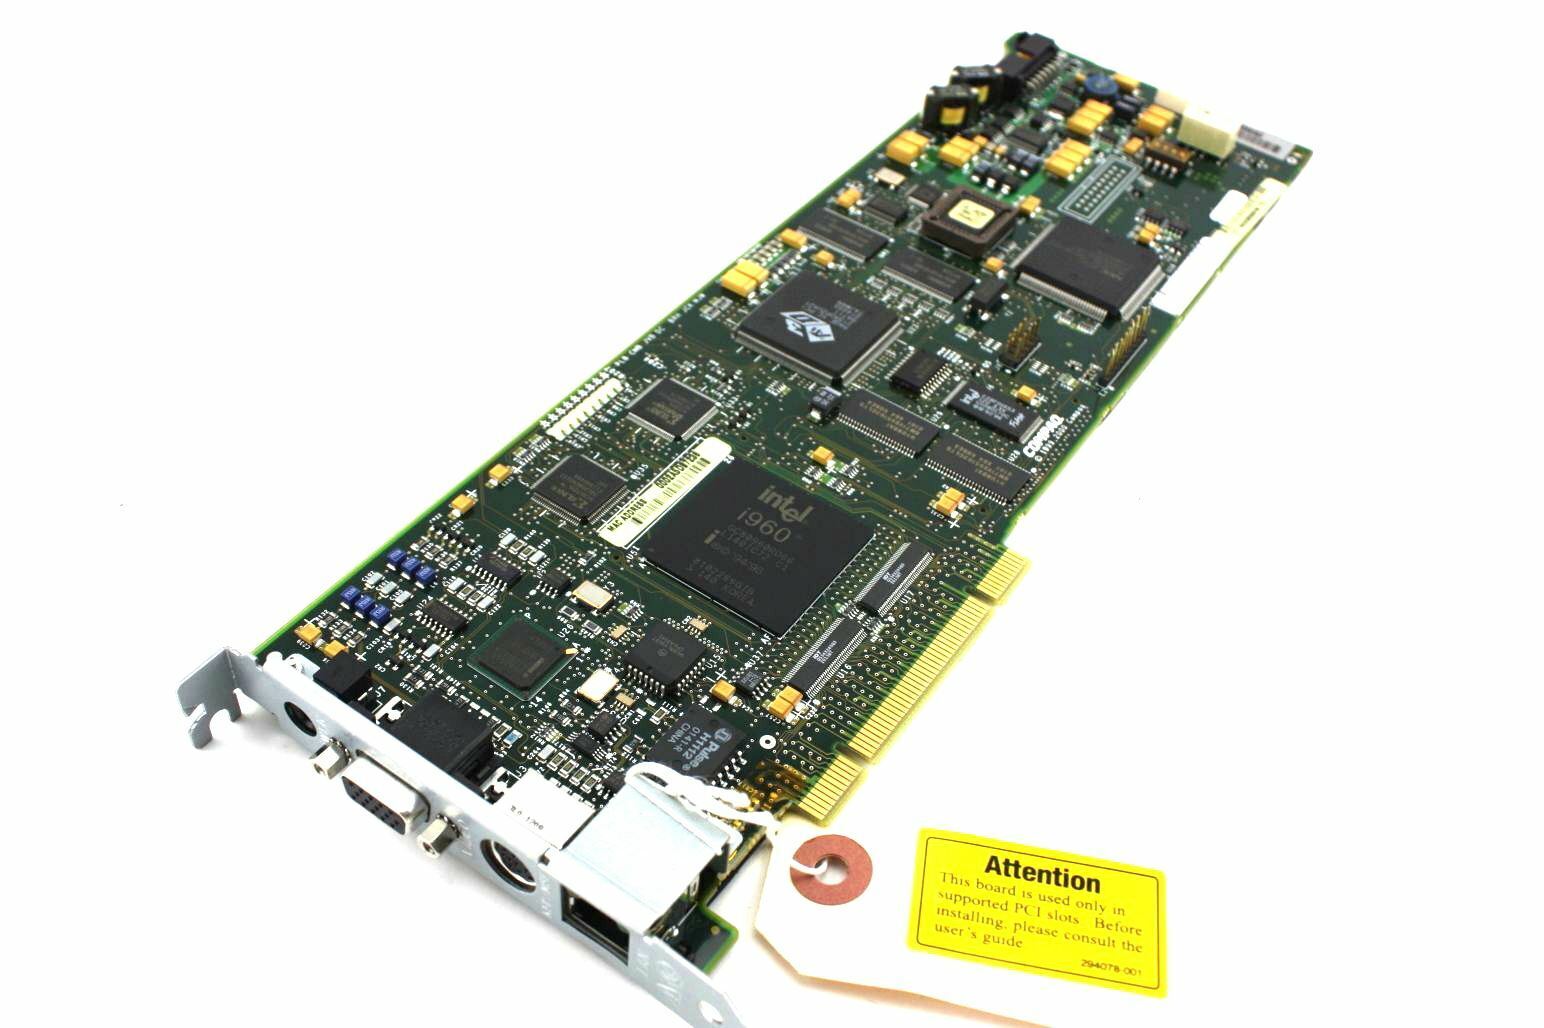 Genuine HP Compaq DL380 ML370 Lights Out Server Remote Insight Board  227925-001